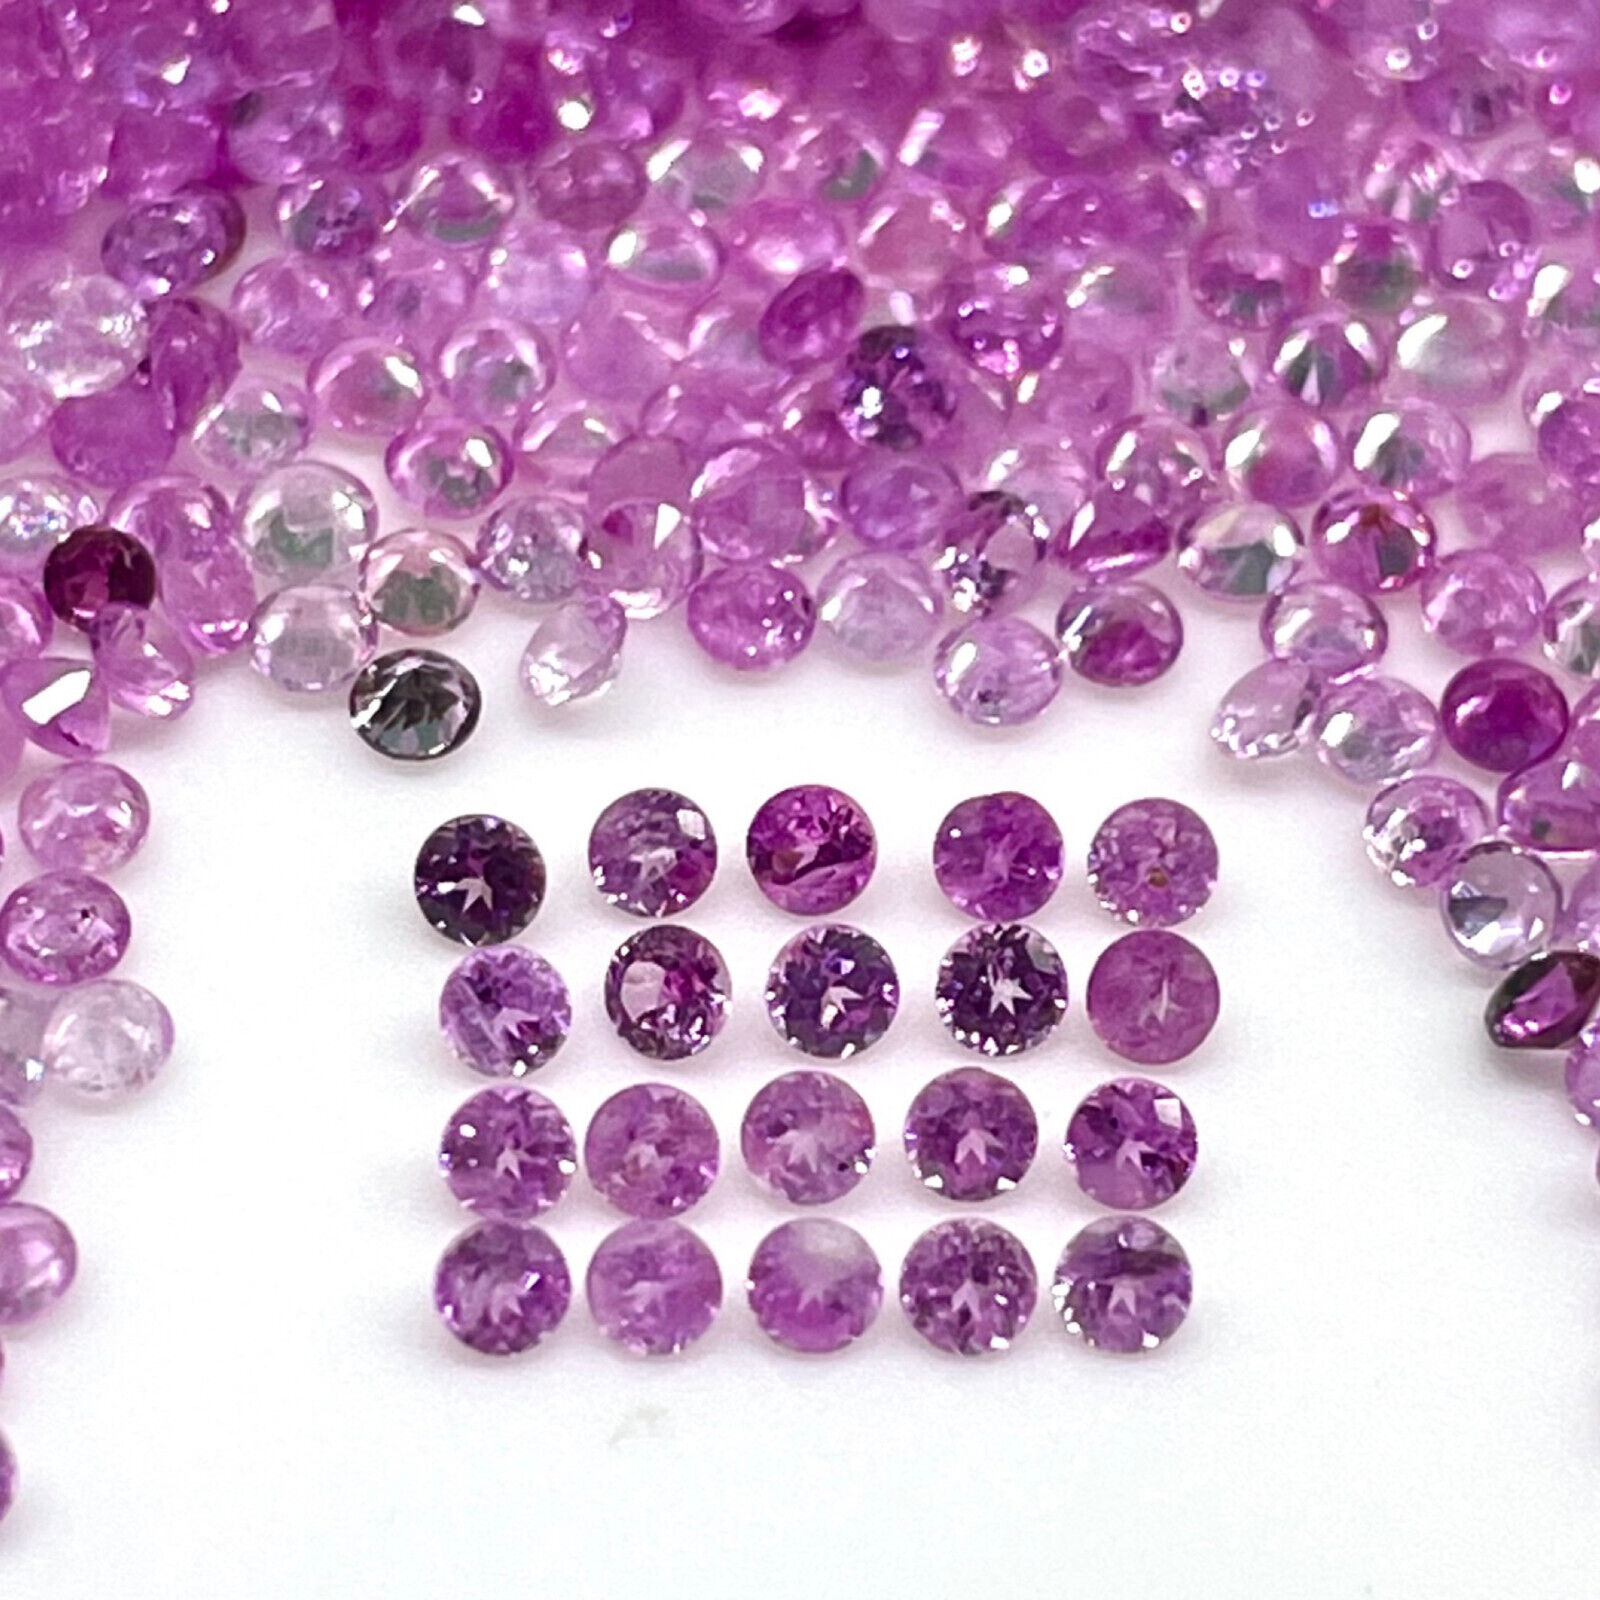 100 Pcs Natural Pink Sapphire 1.7mm Round Cut Loose Gemstones Wholesale Lot